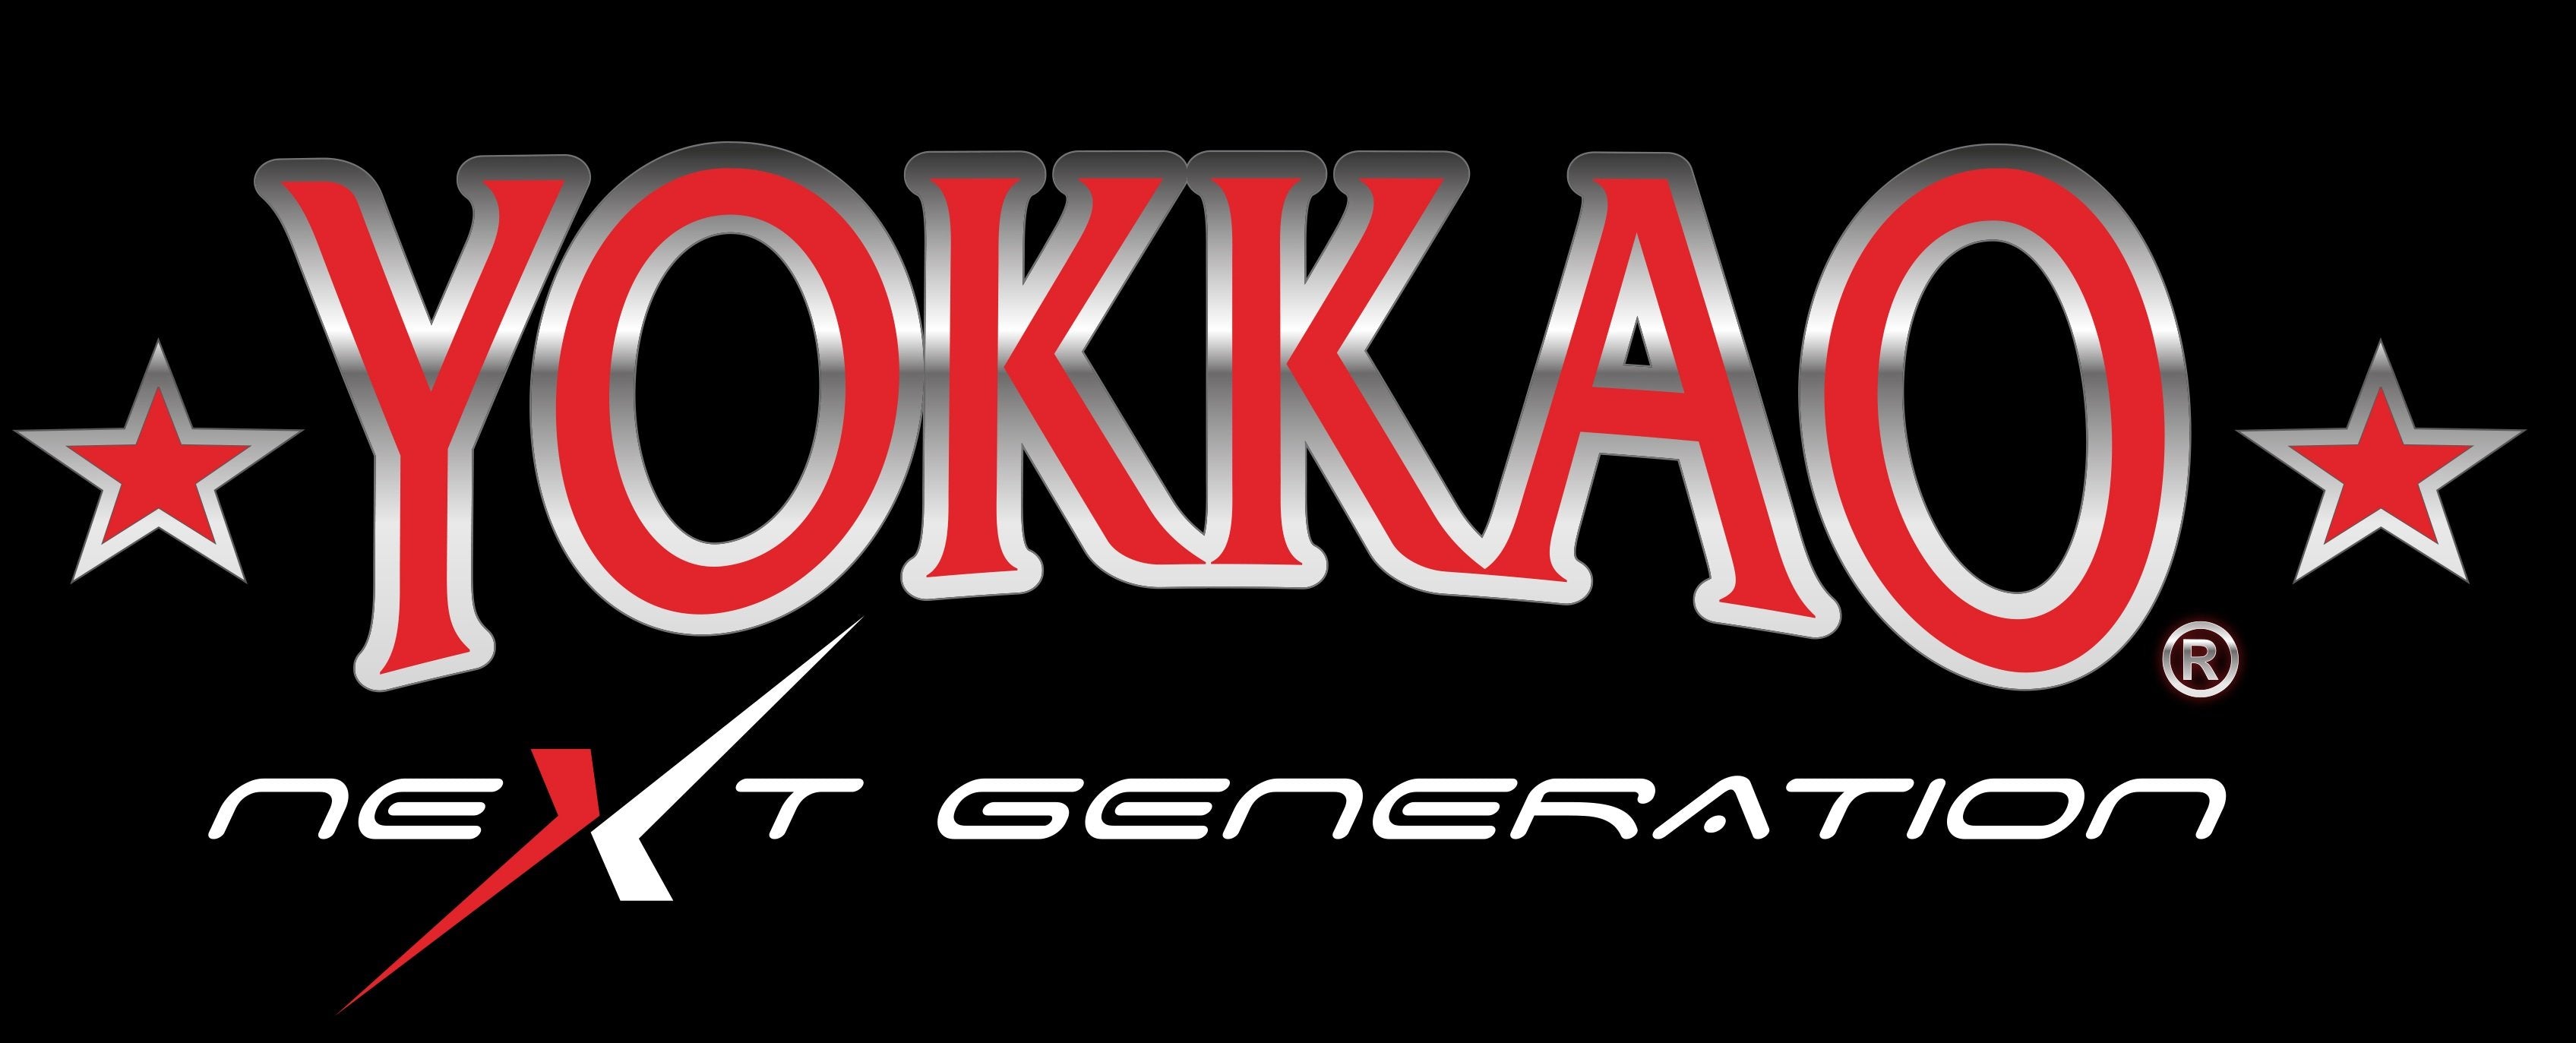 YOKKAO Next Generation Muay Thai events coming soon!